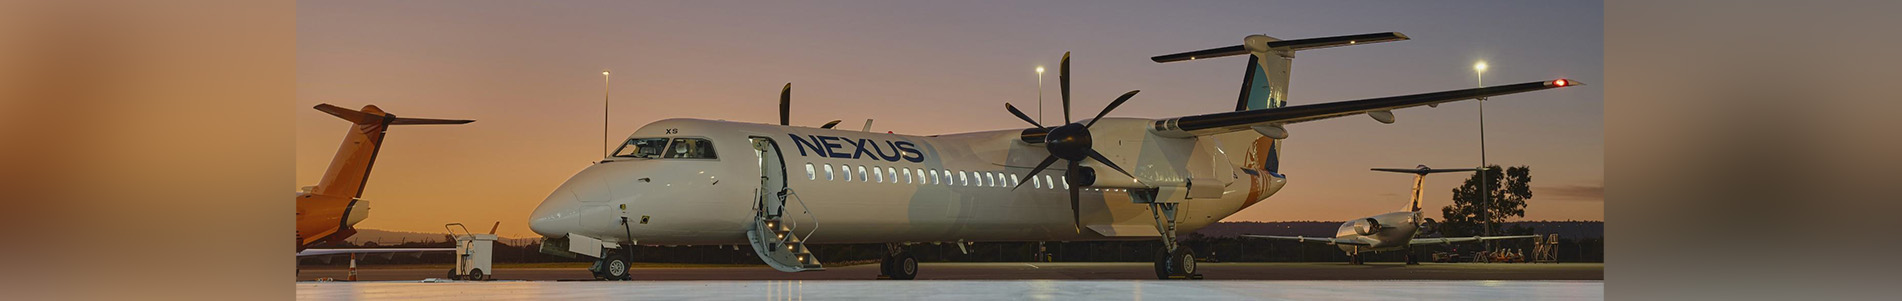 Picture: Nexus Airlines has landed in Geraldton